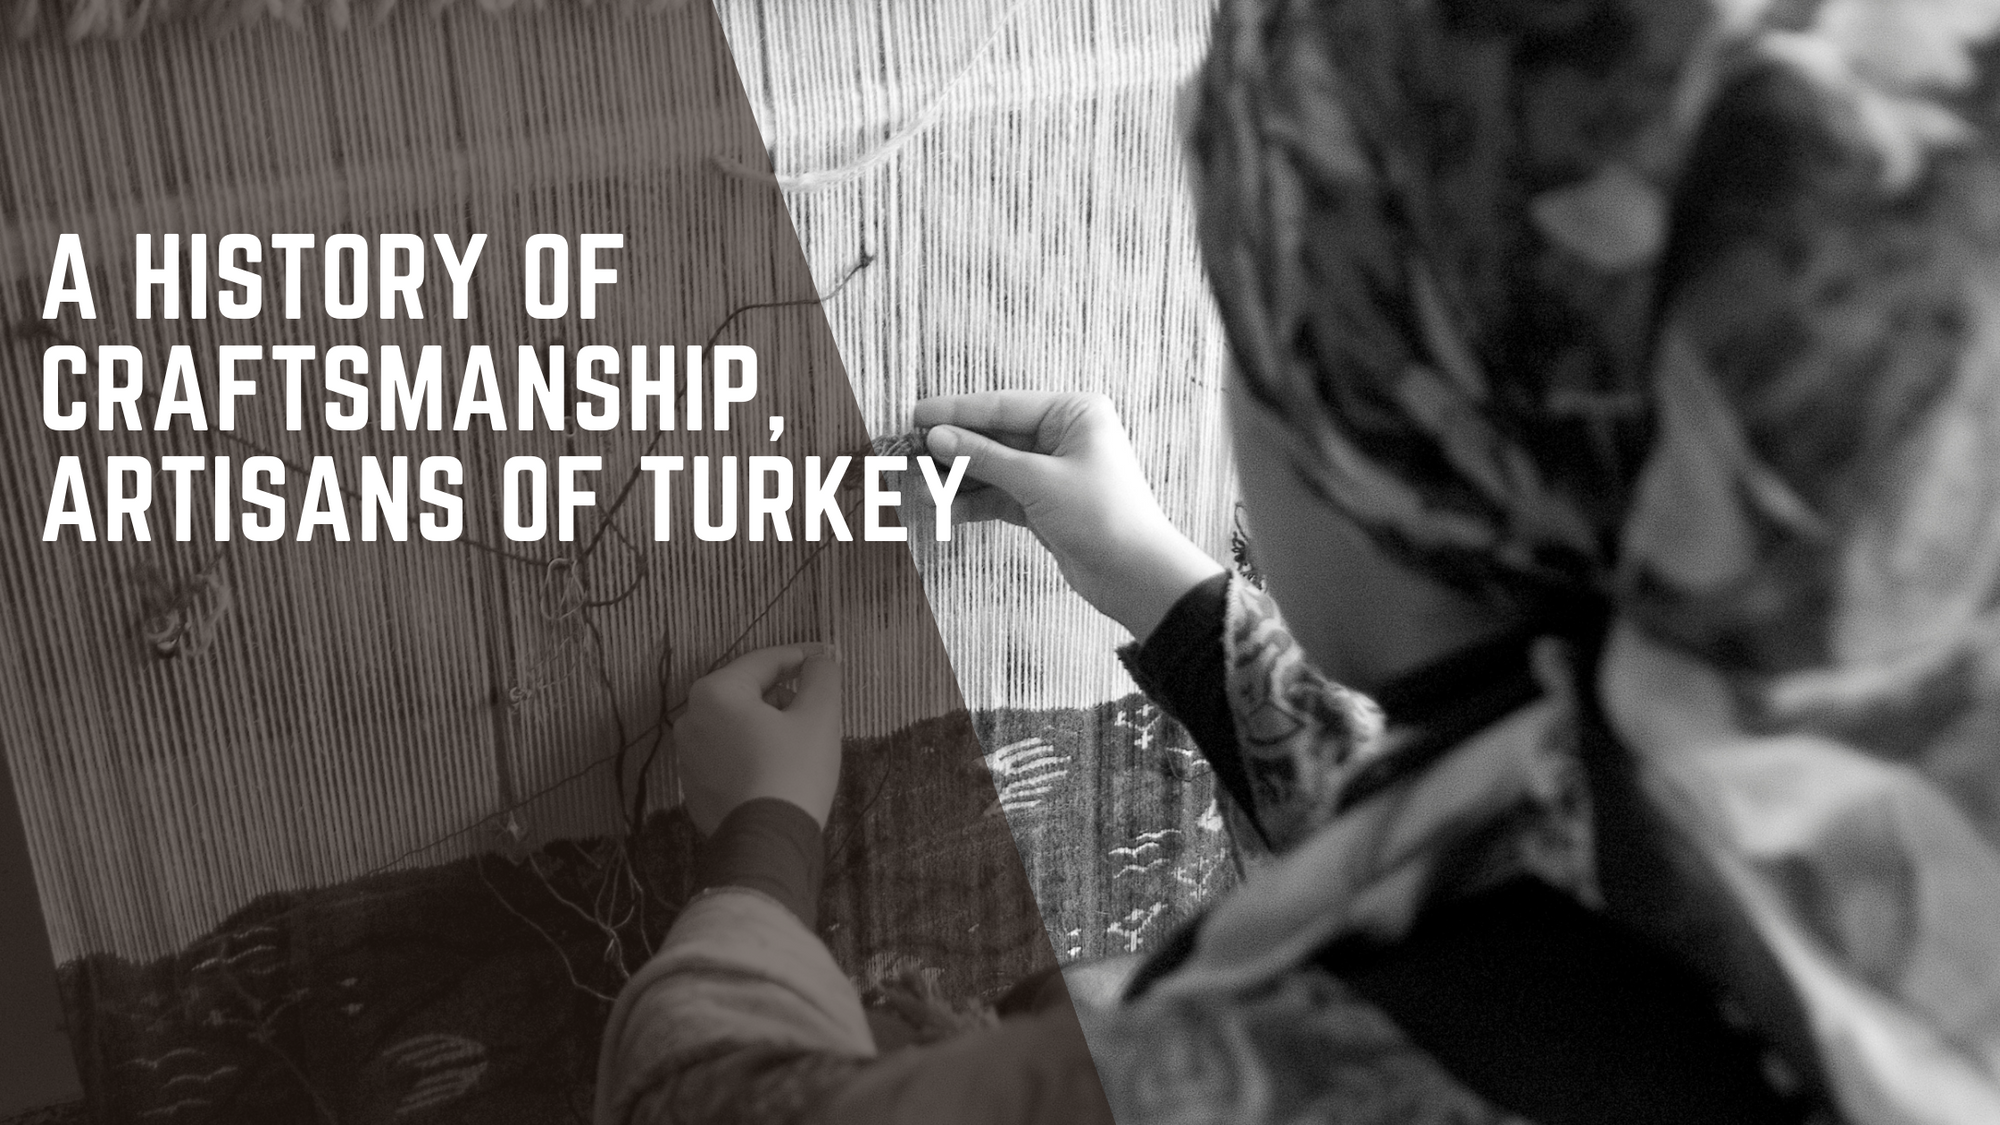 A history of craftsmanship, Artisans of Turkey